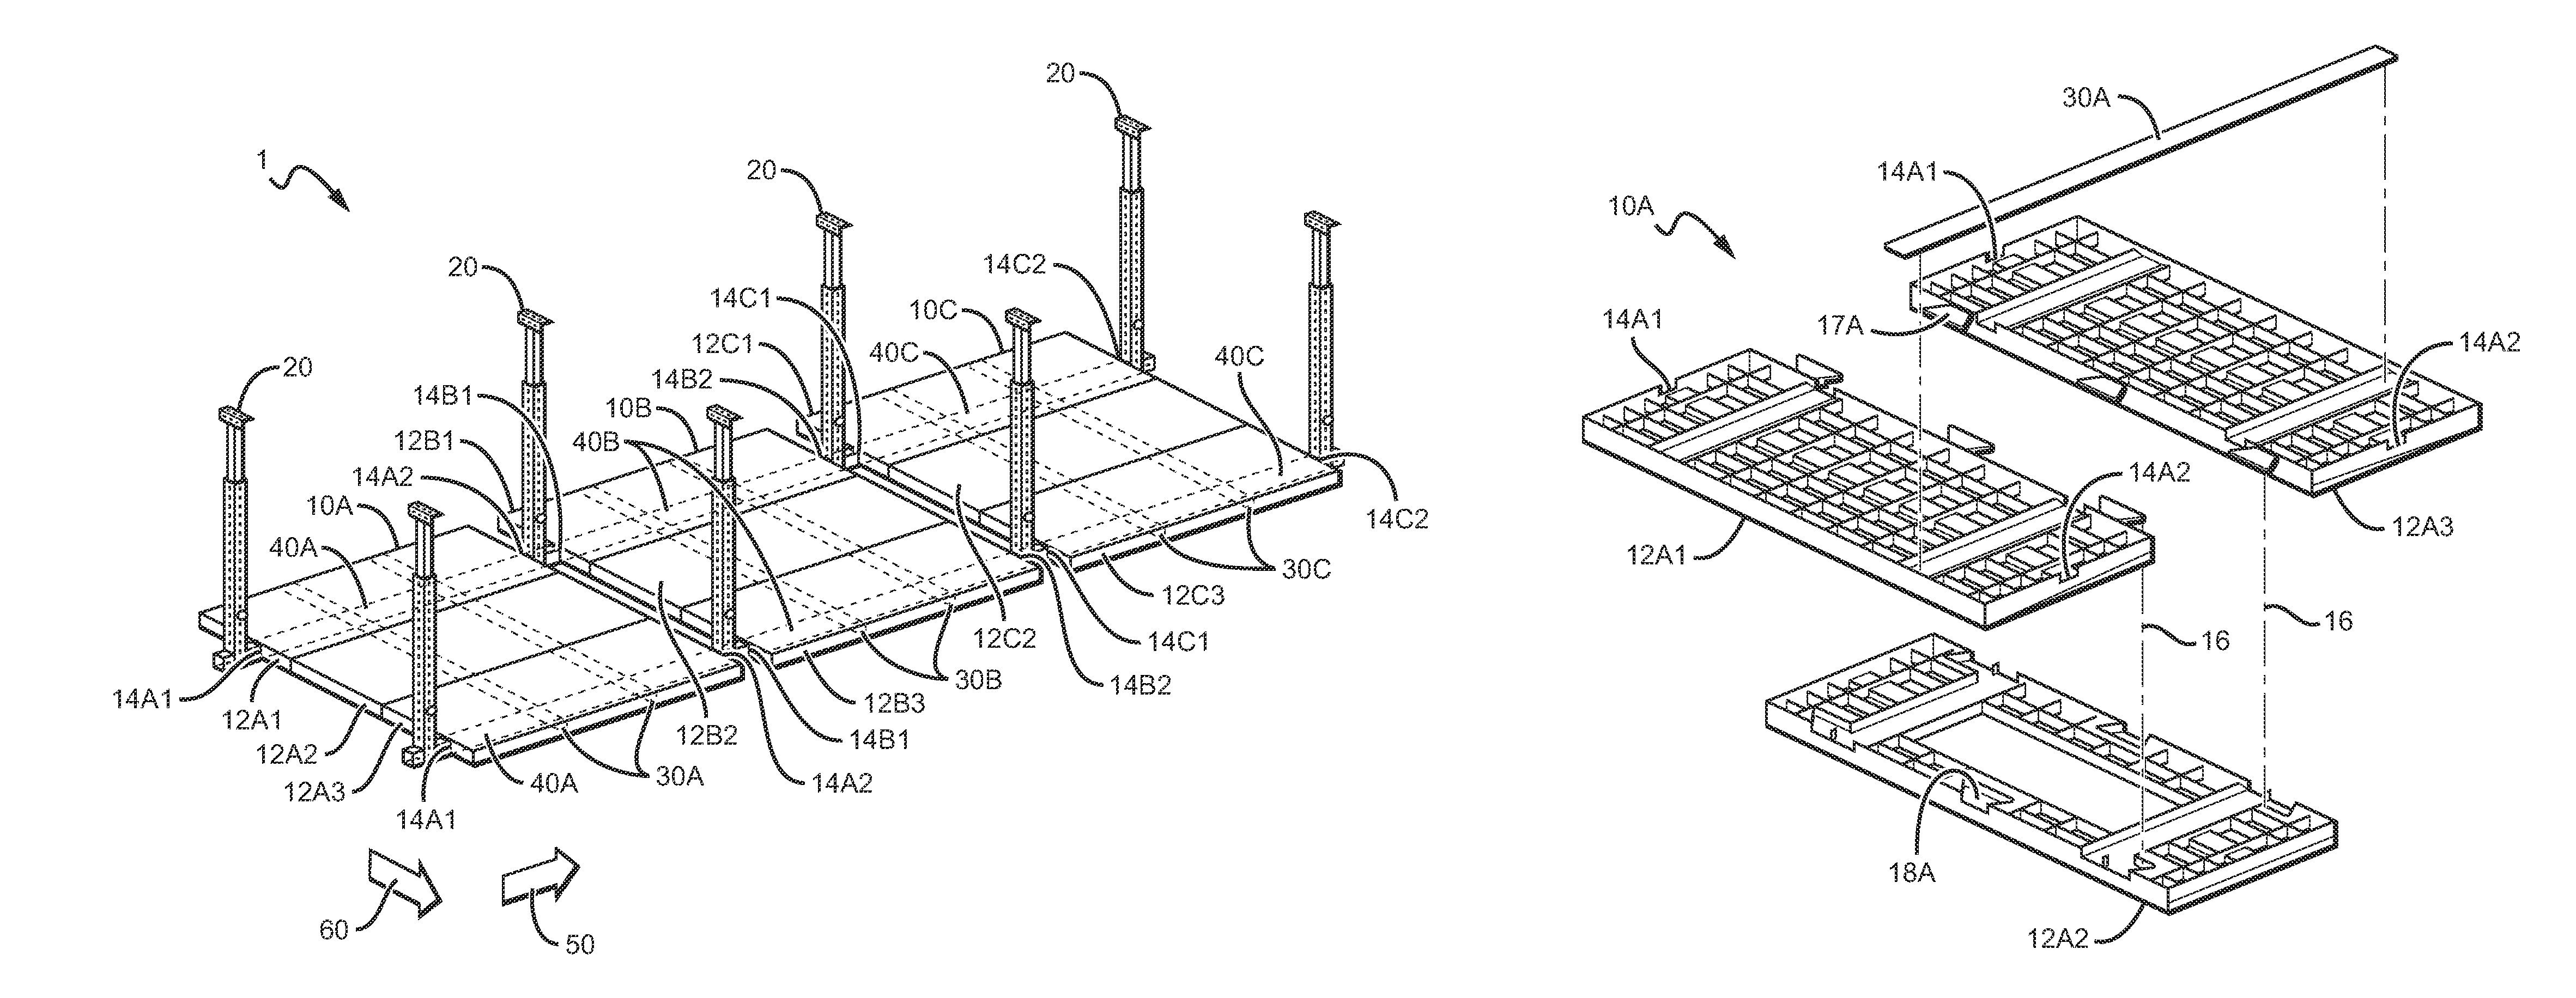 Modular overhead storage